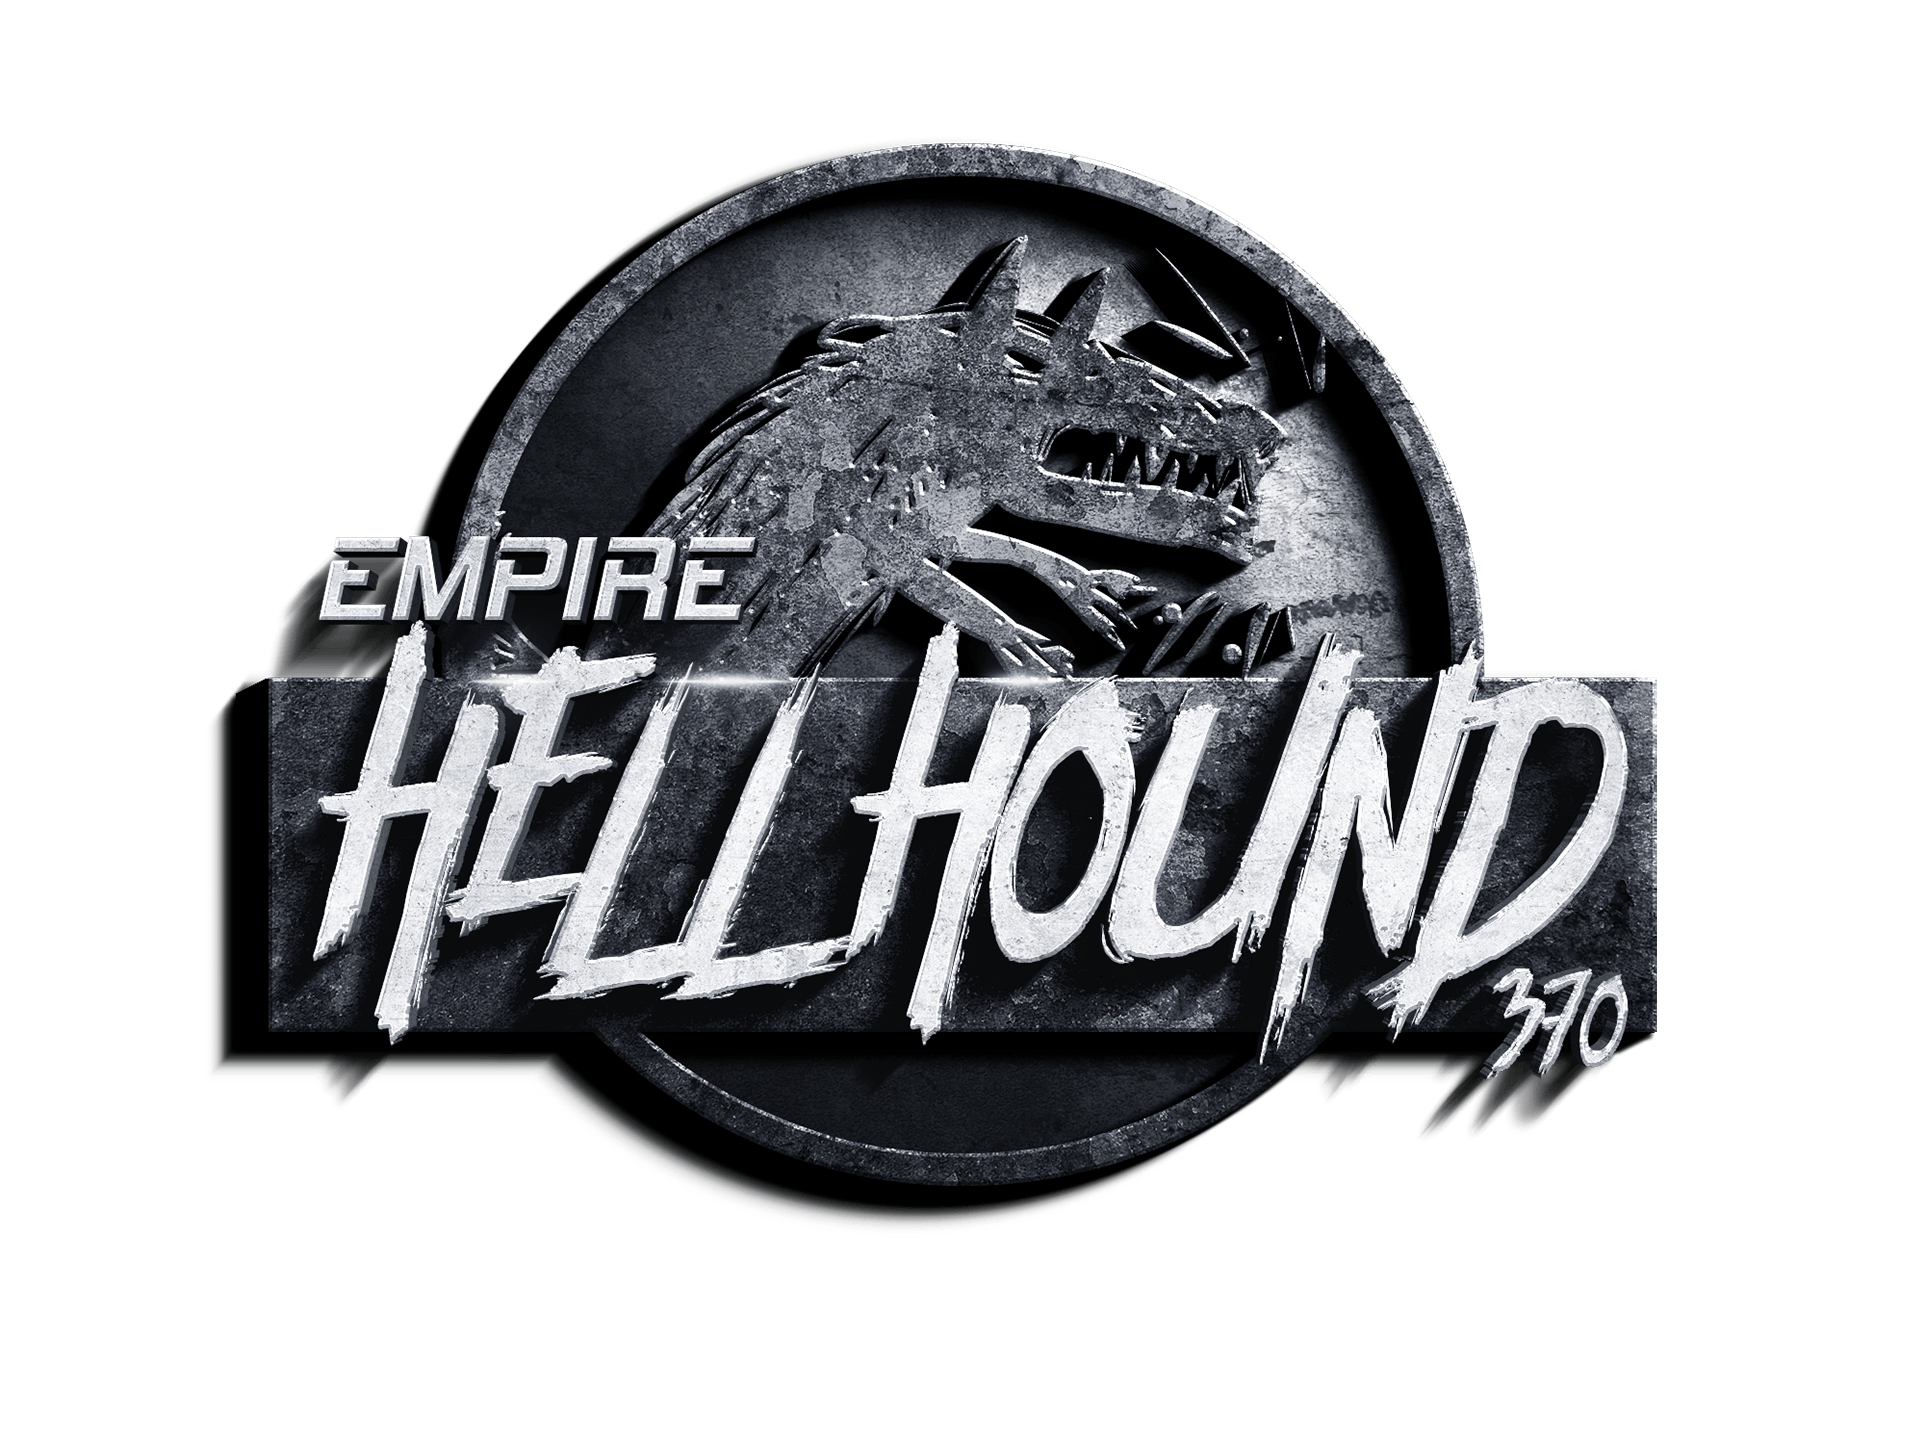 Hellhound Logo - Empire Hellhound 370